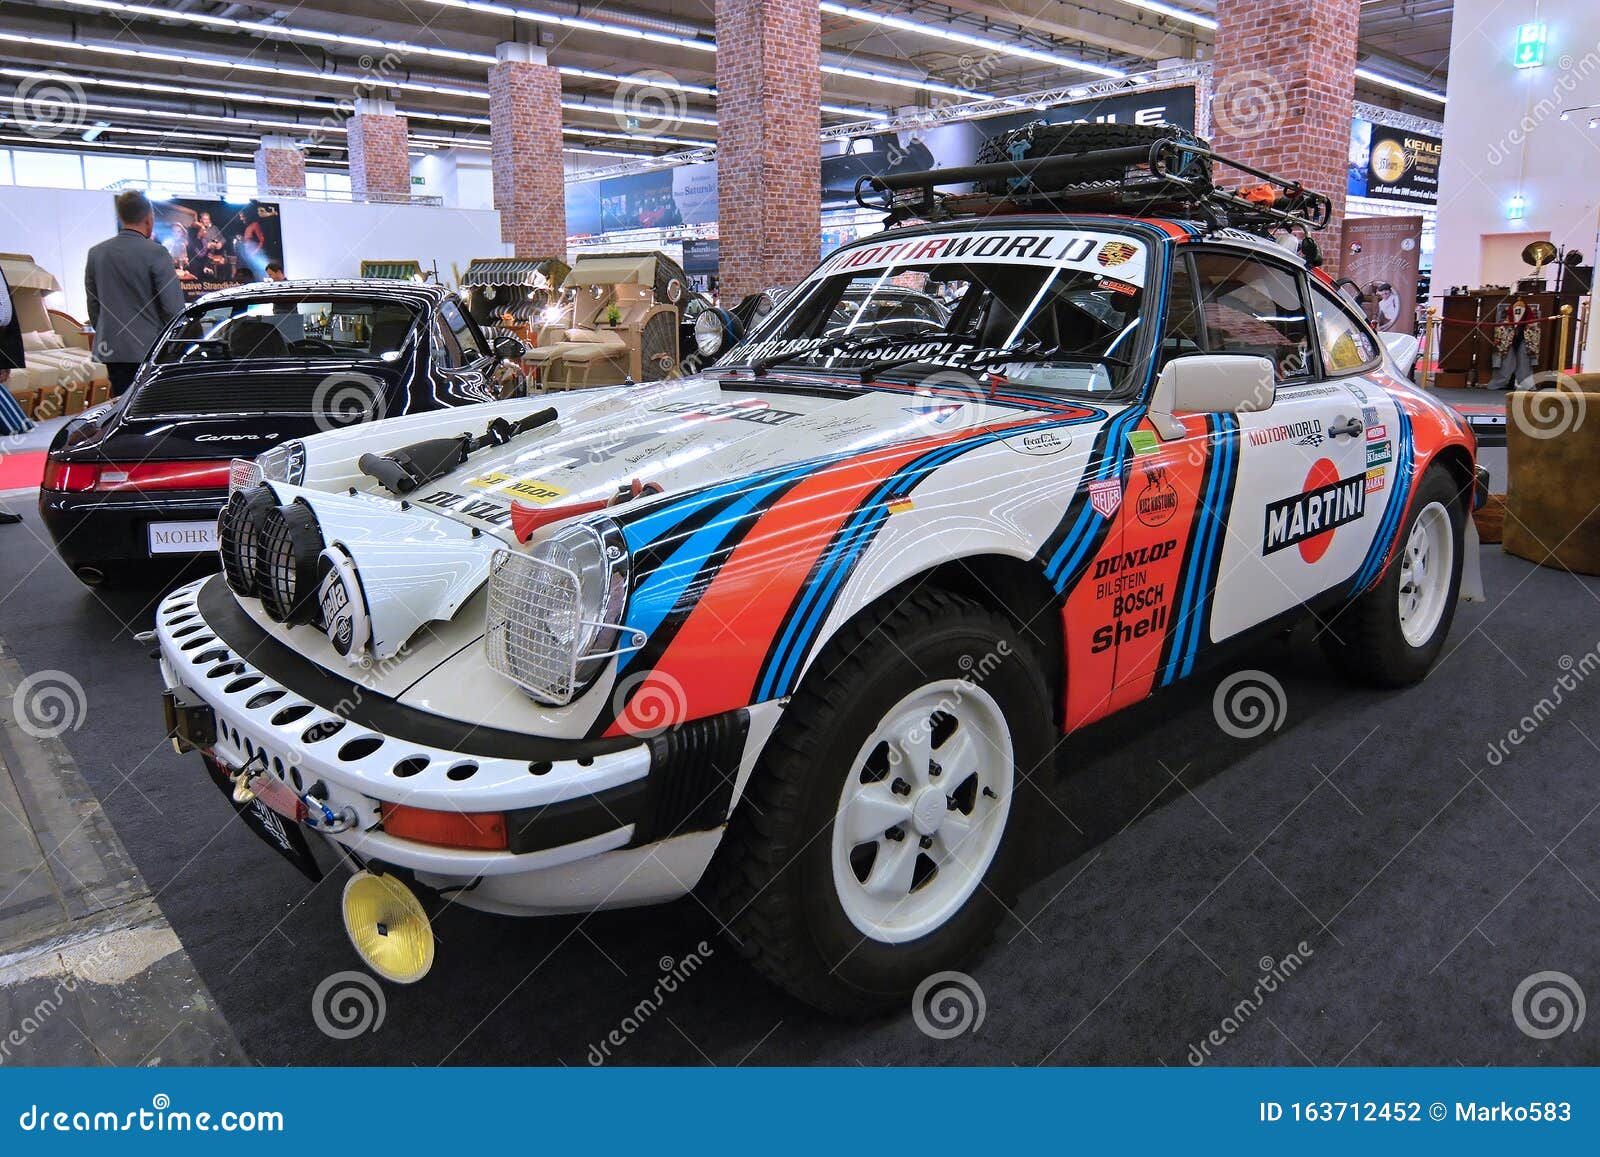 68. IAA Frankfurt 2019 - Porsche 911 Carrera Rallye `Martini-Racing`  Editorial Photography - Image of martini, porsche: 163712452